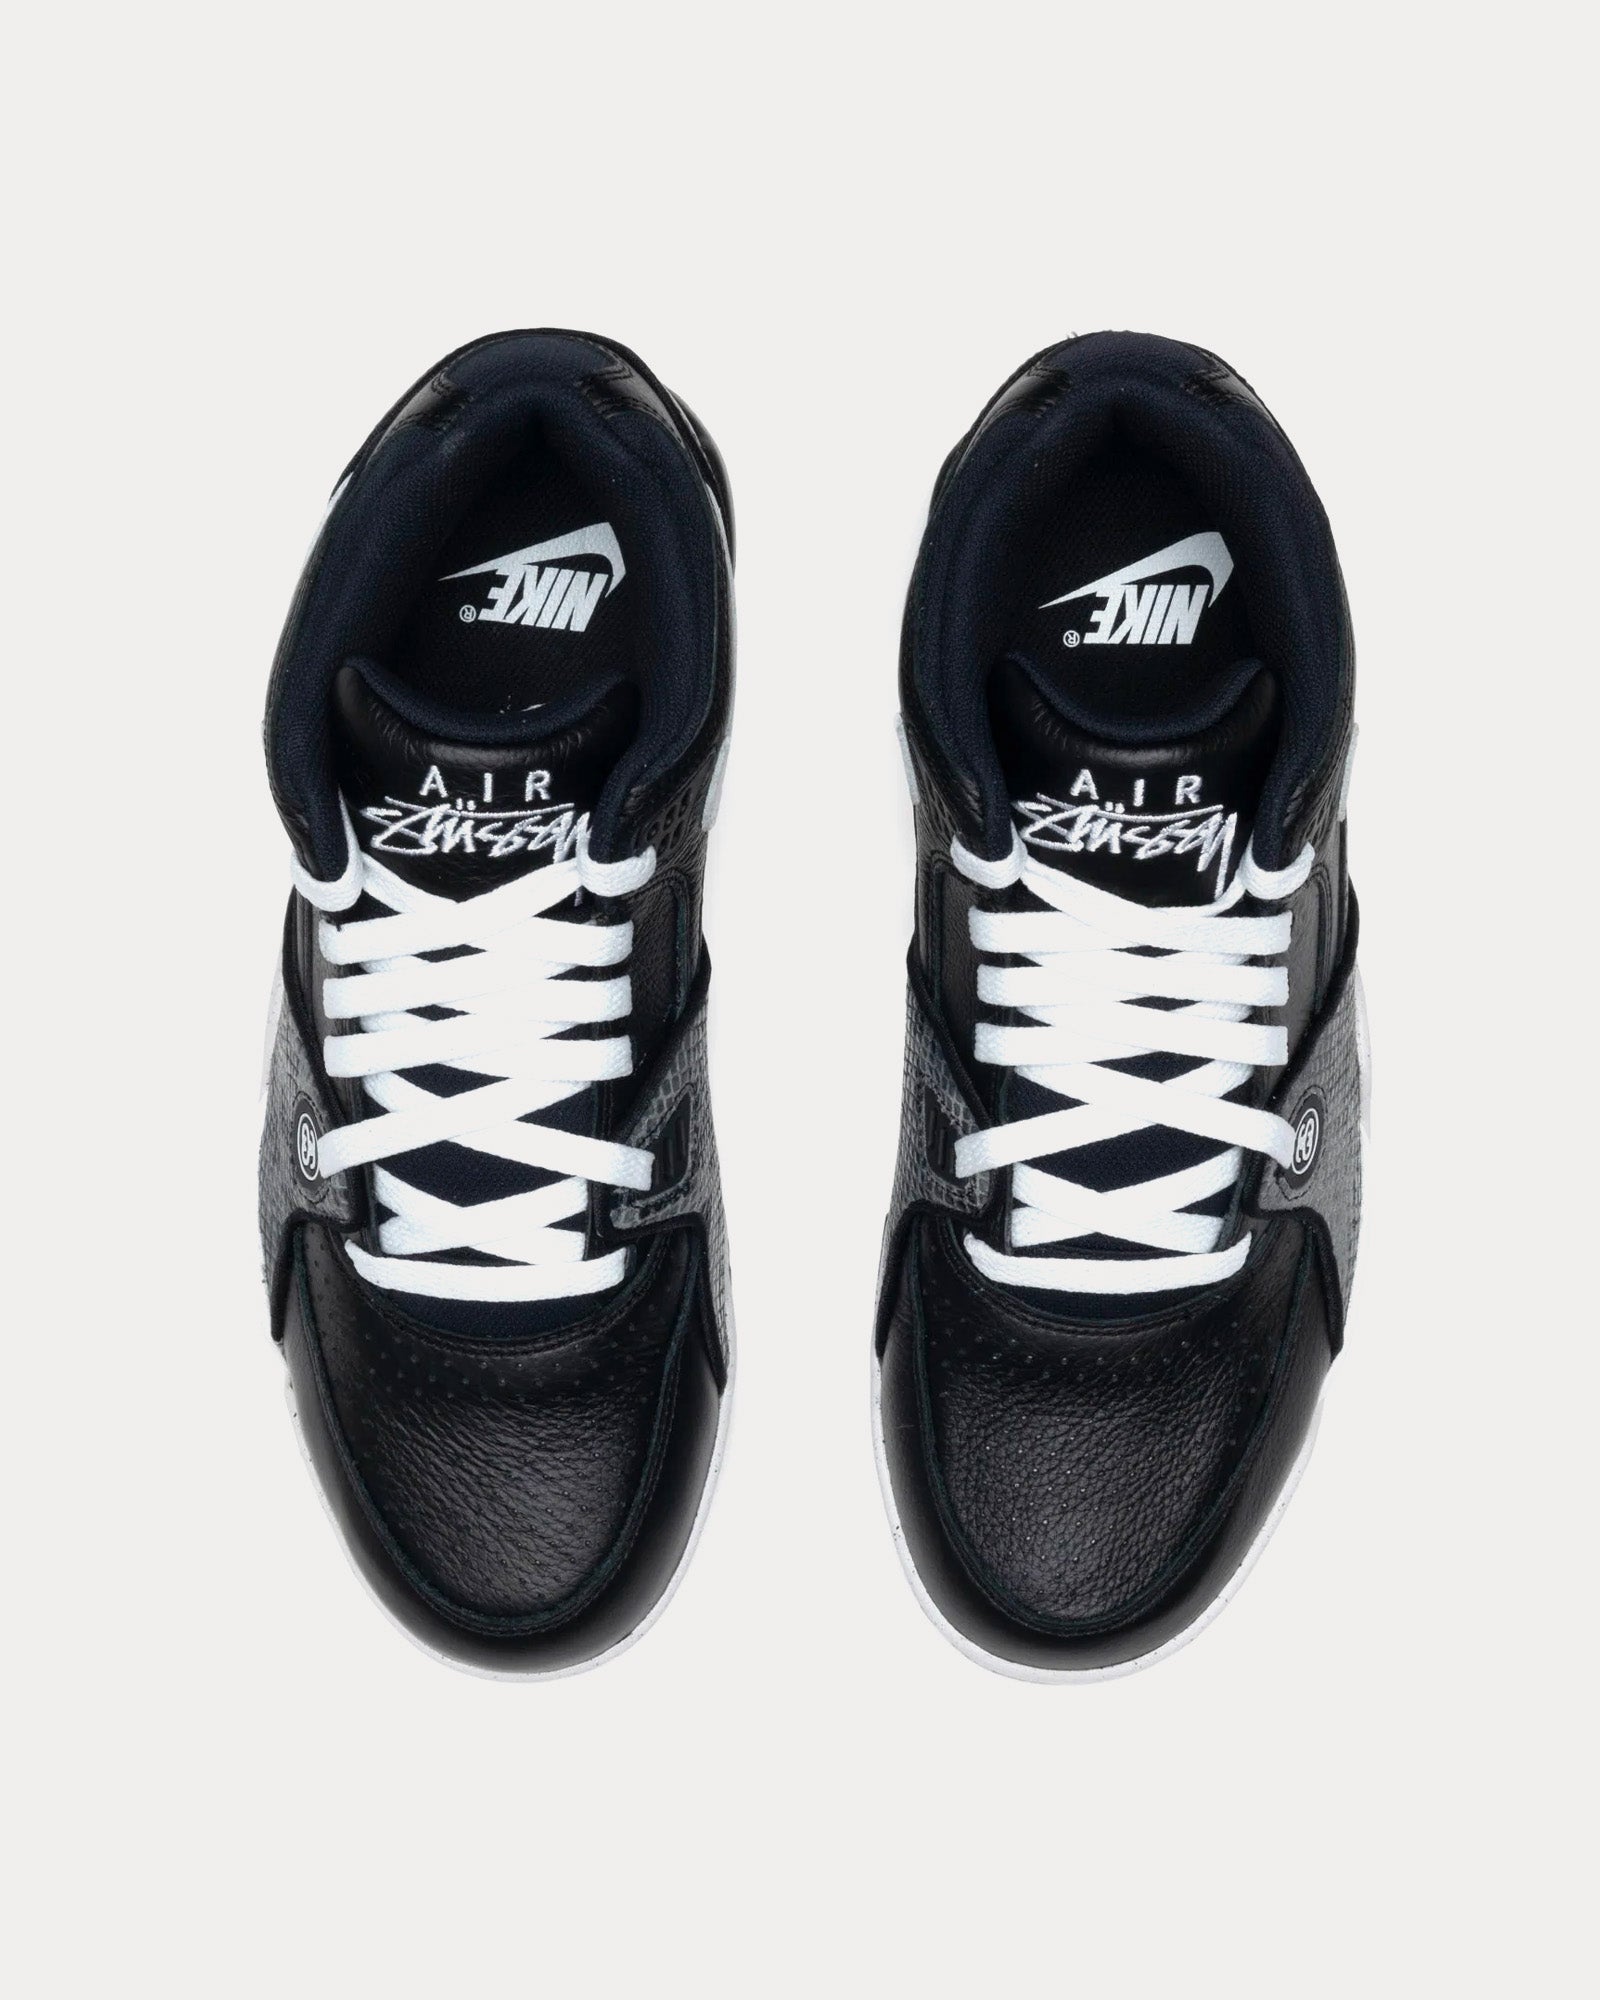 Nike x Stussy - Air Flight '89 Low Black / White / White Low Top Sneakers